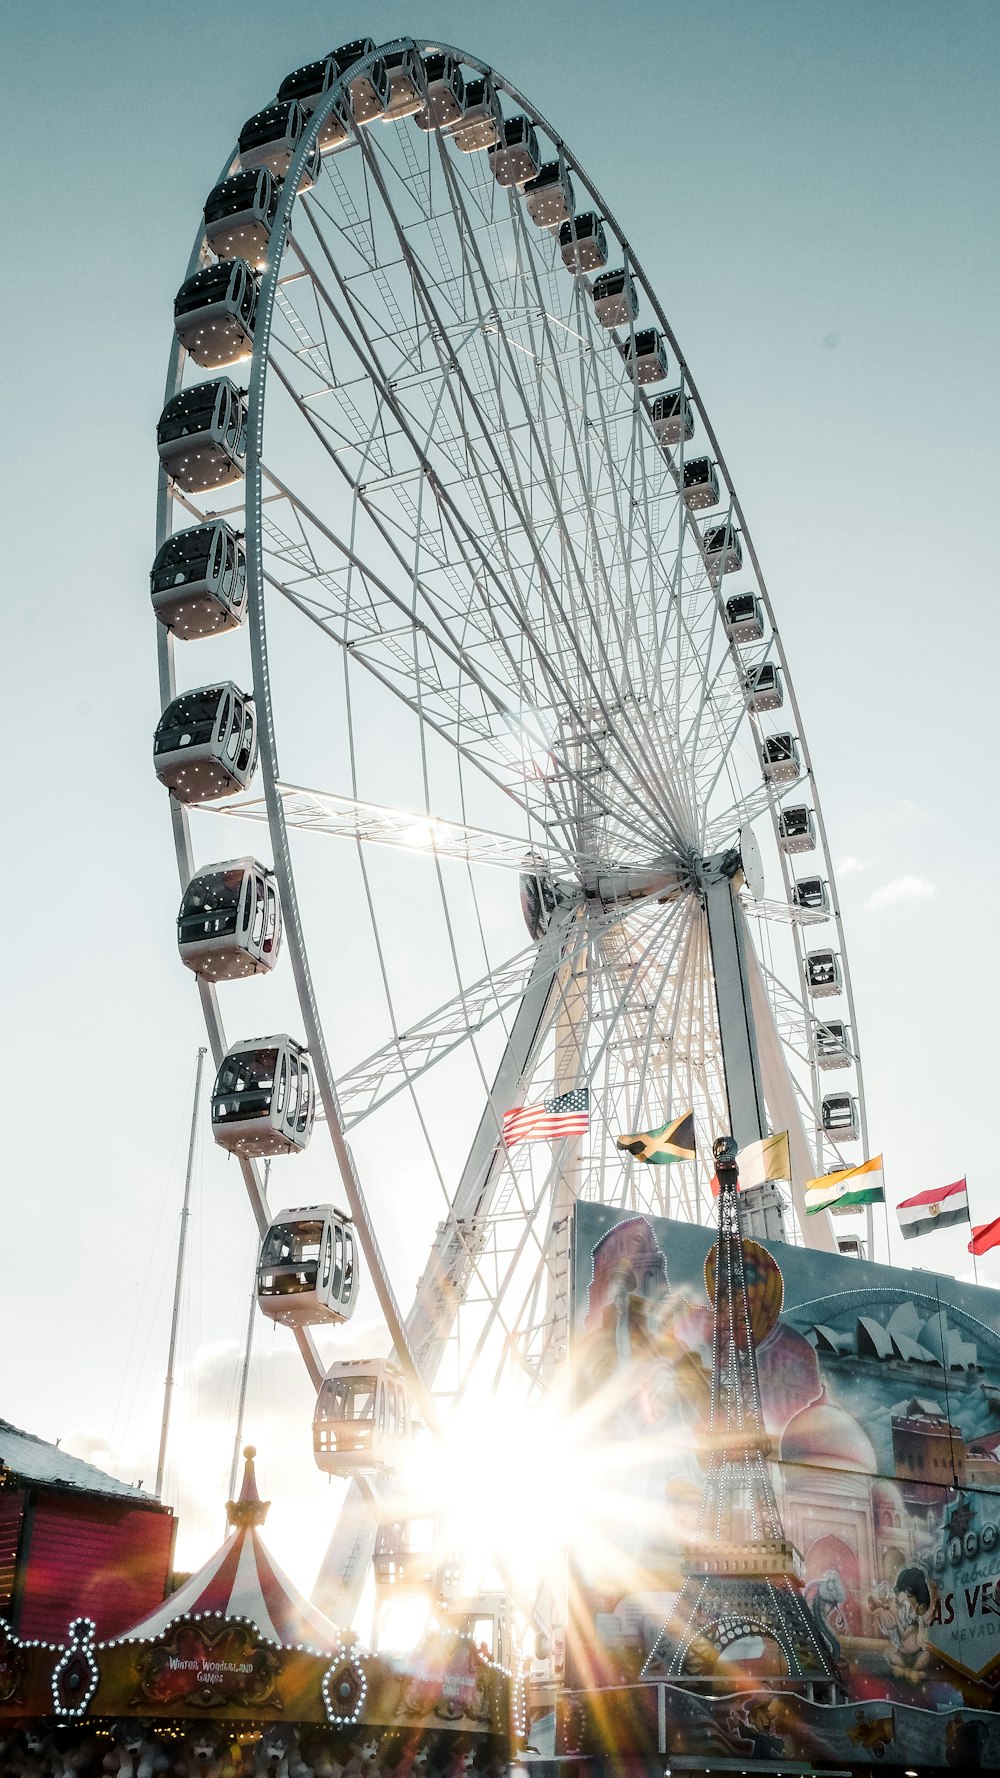 gray Ferris wheel in amusement park